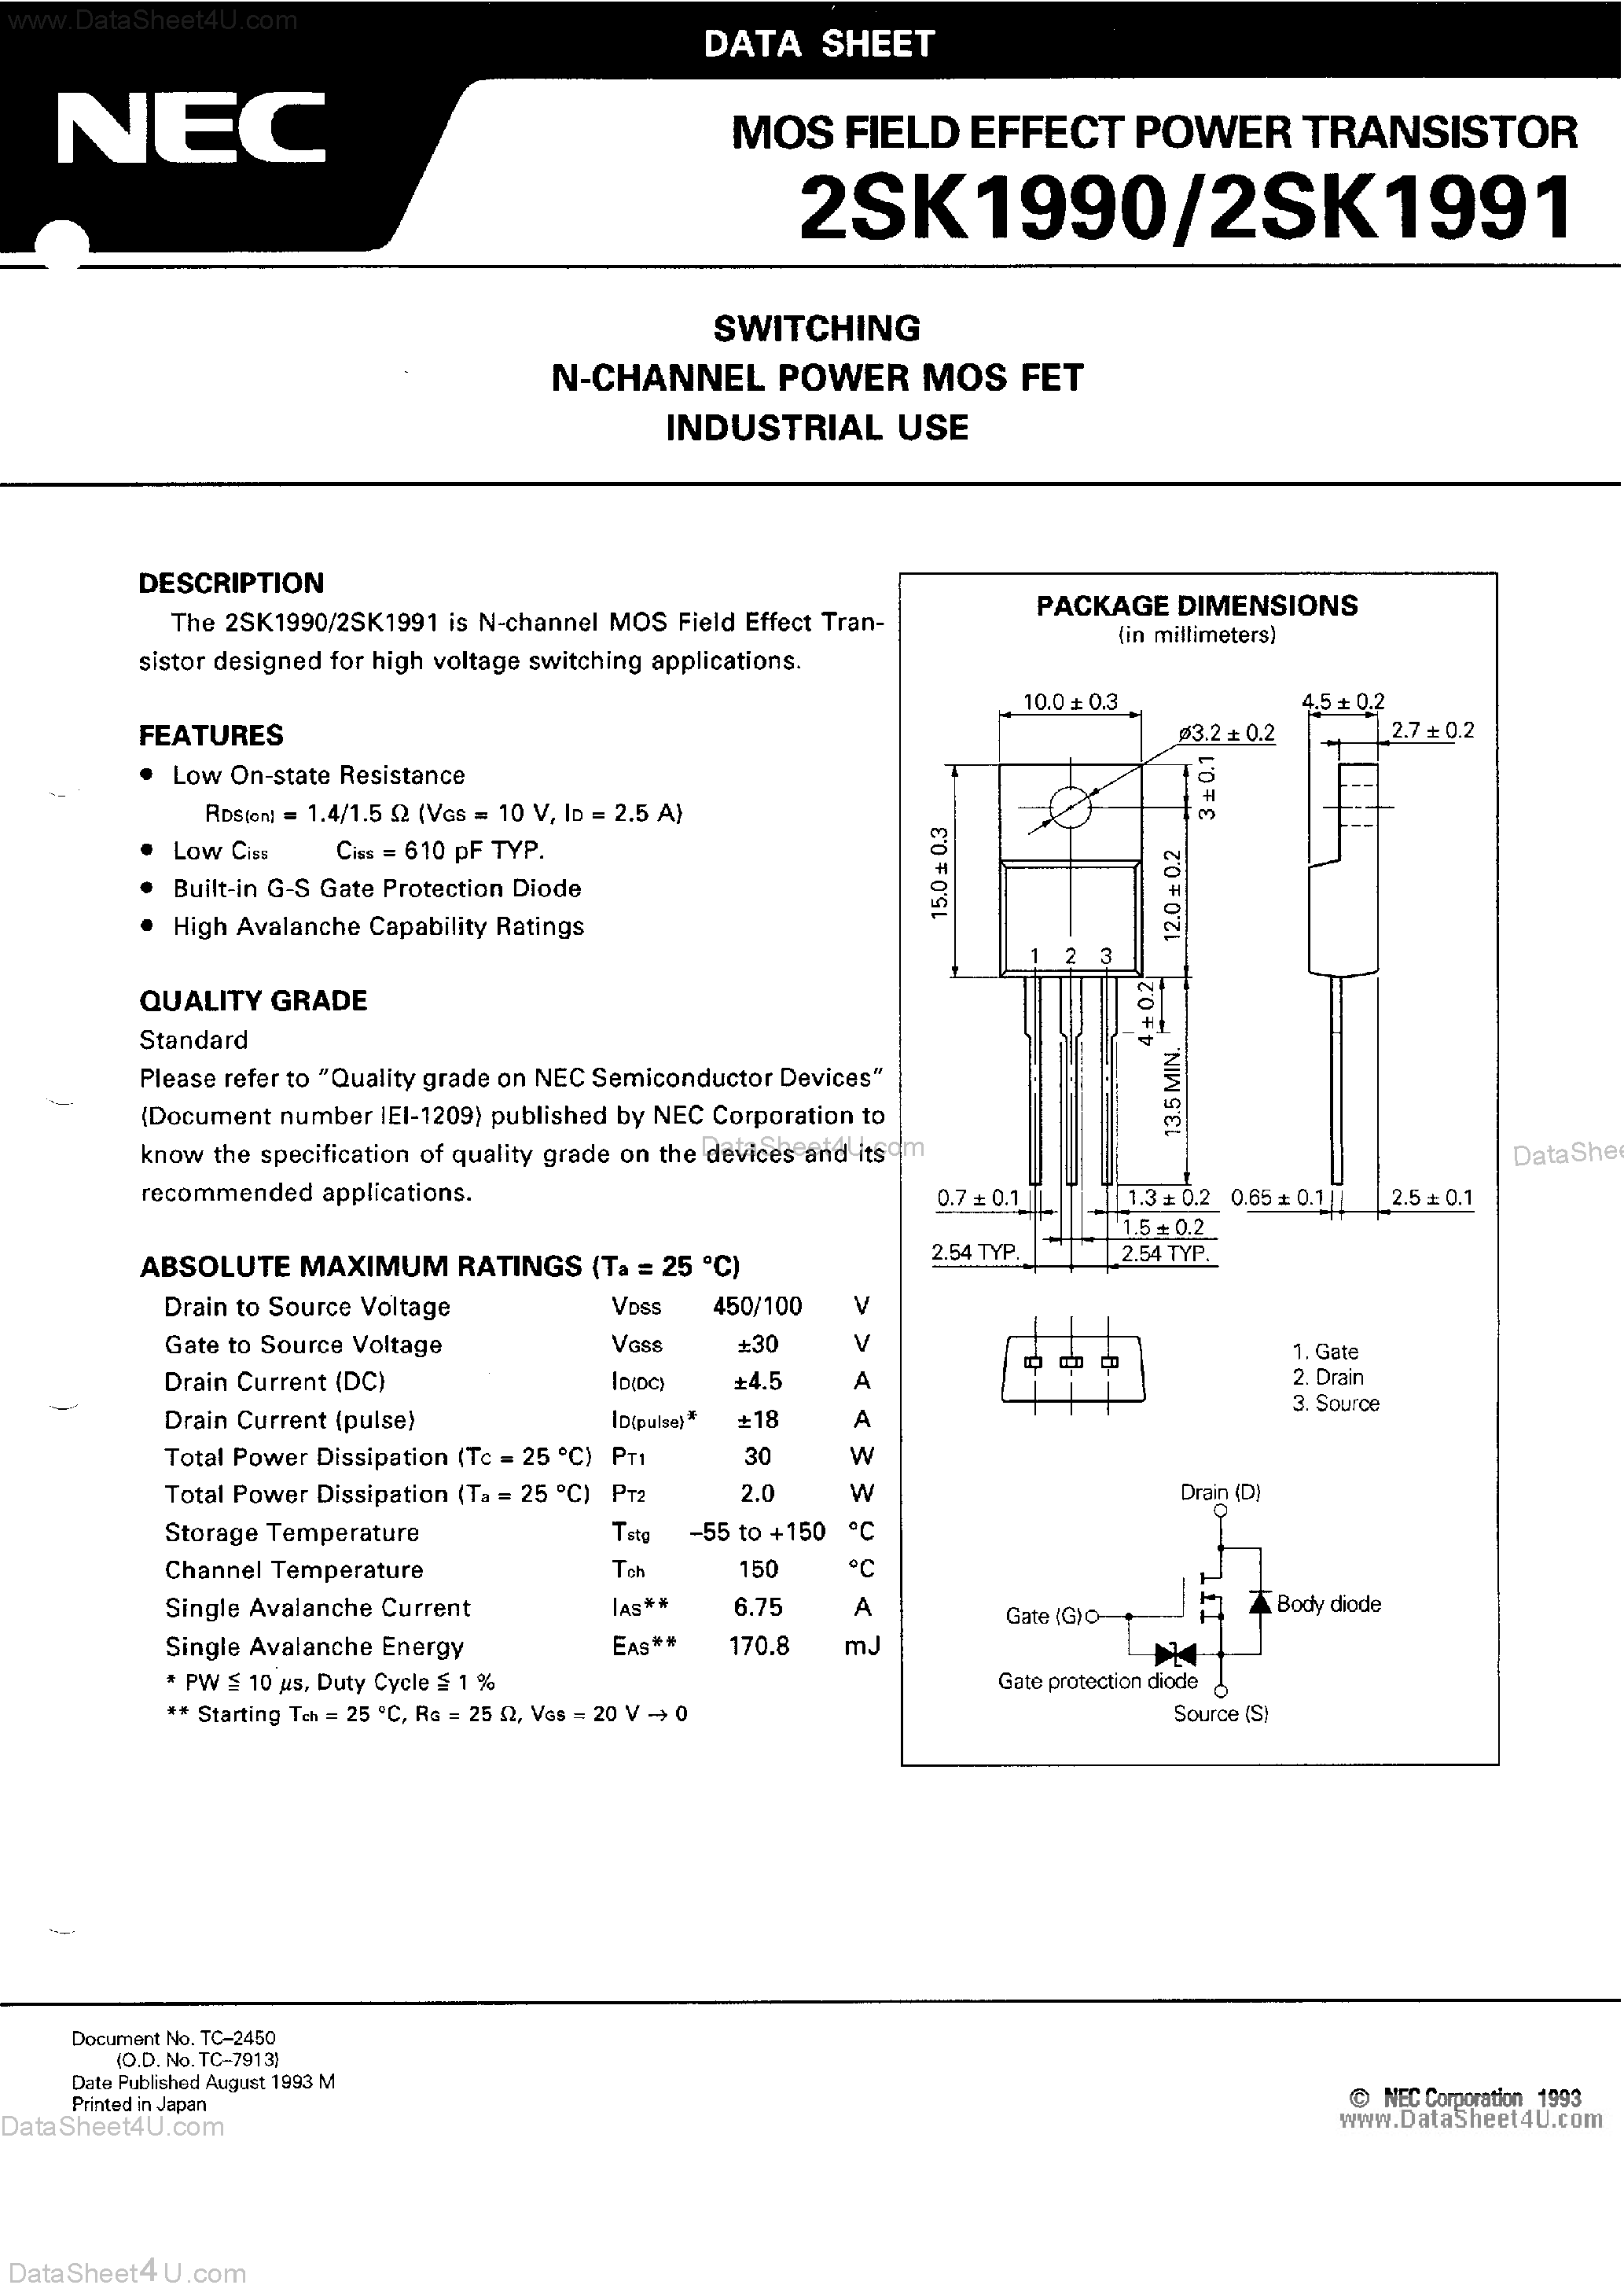 Datasheet 2SK1990 - (2SK1990 / 2SK1991) MOS Field Effect Power Transistor page 1